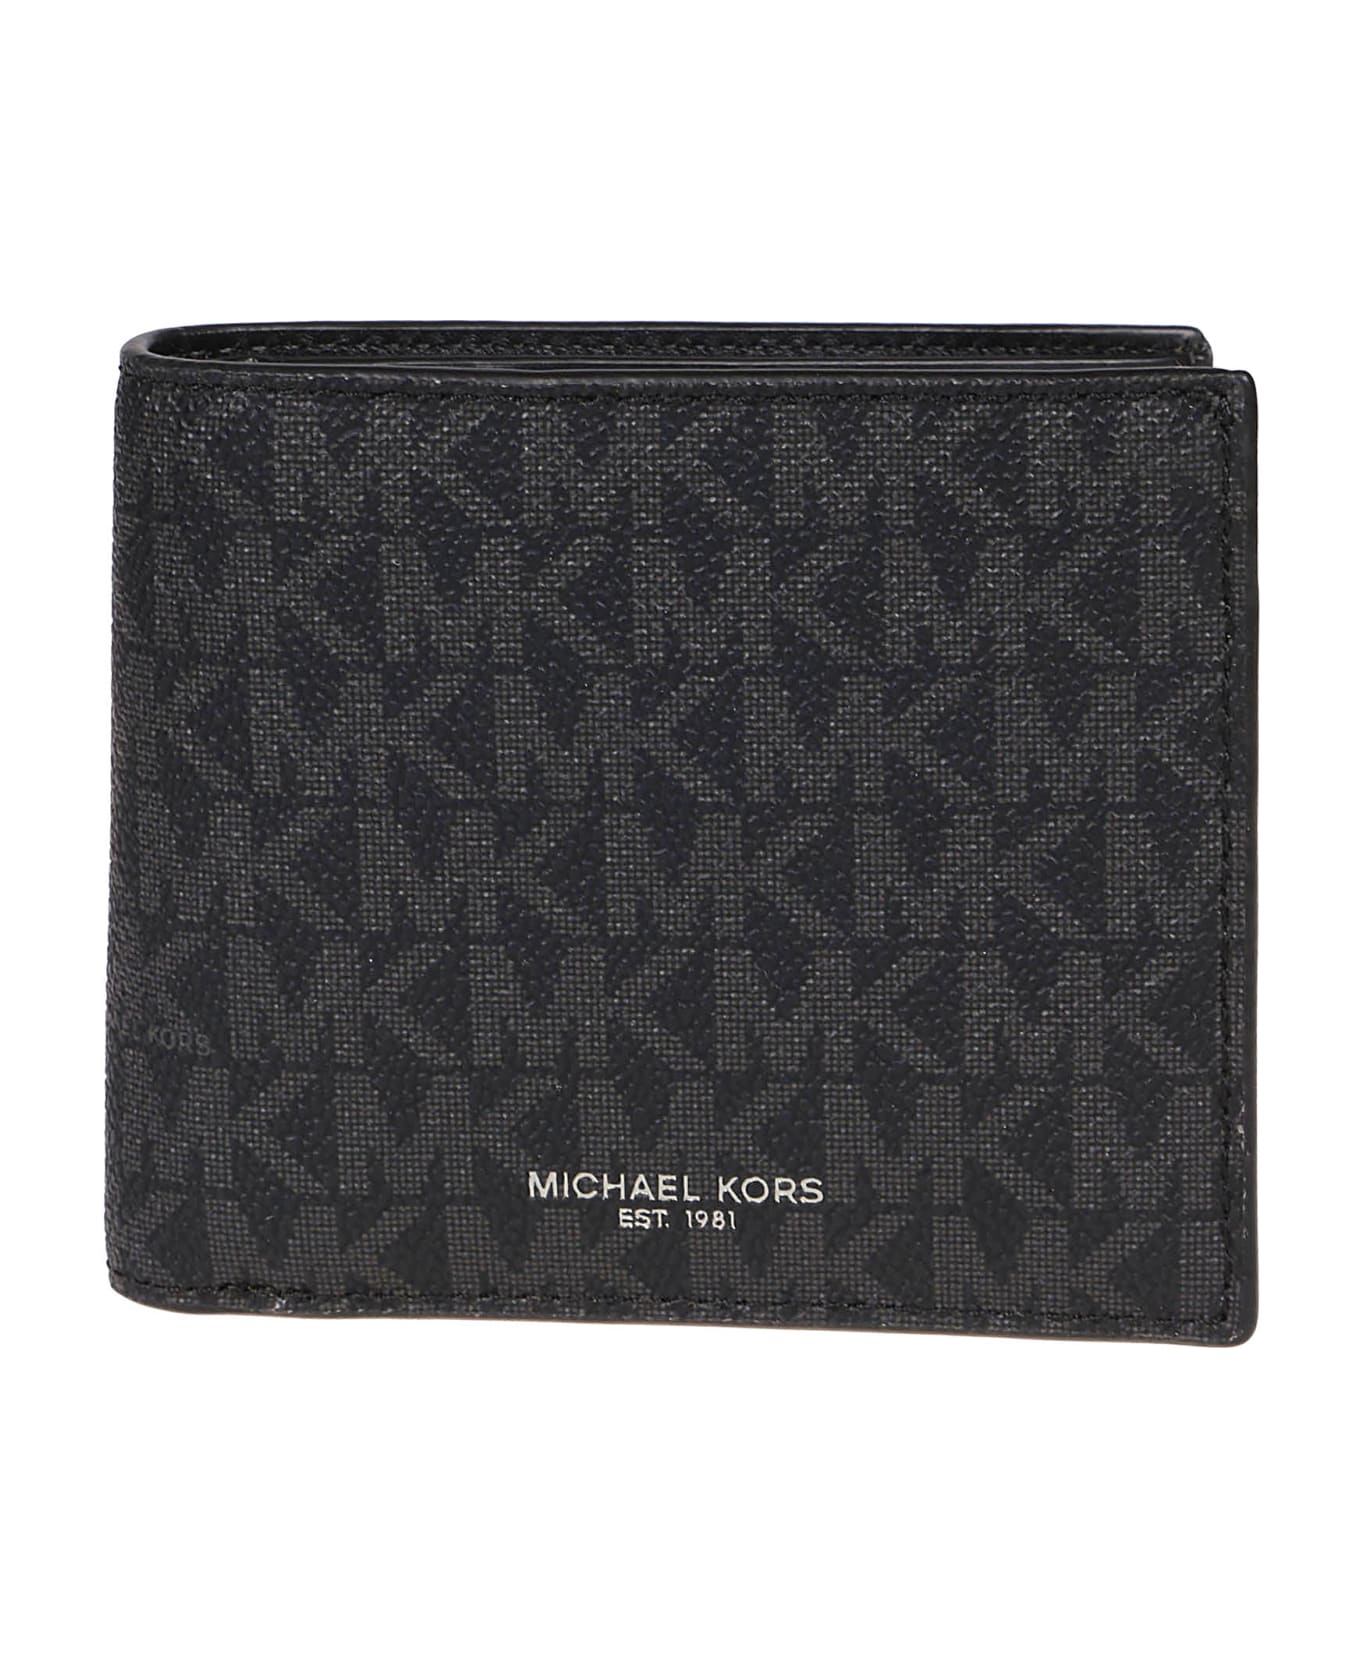 Michael Kors Billfold - Black 財布